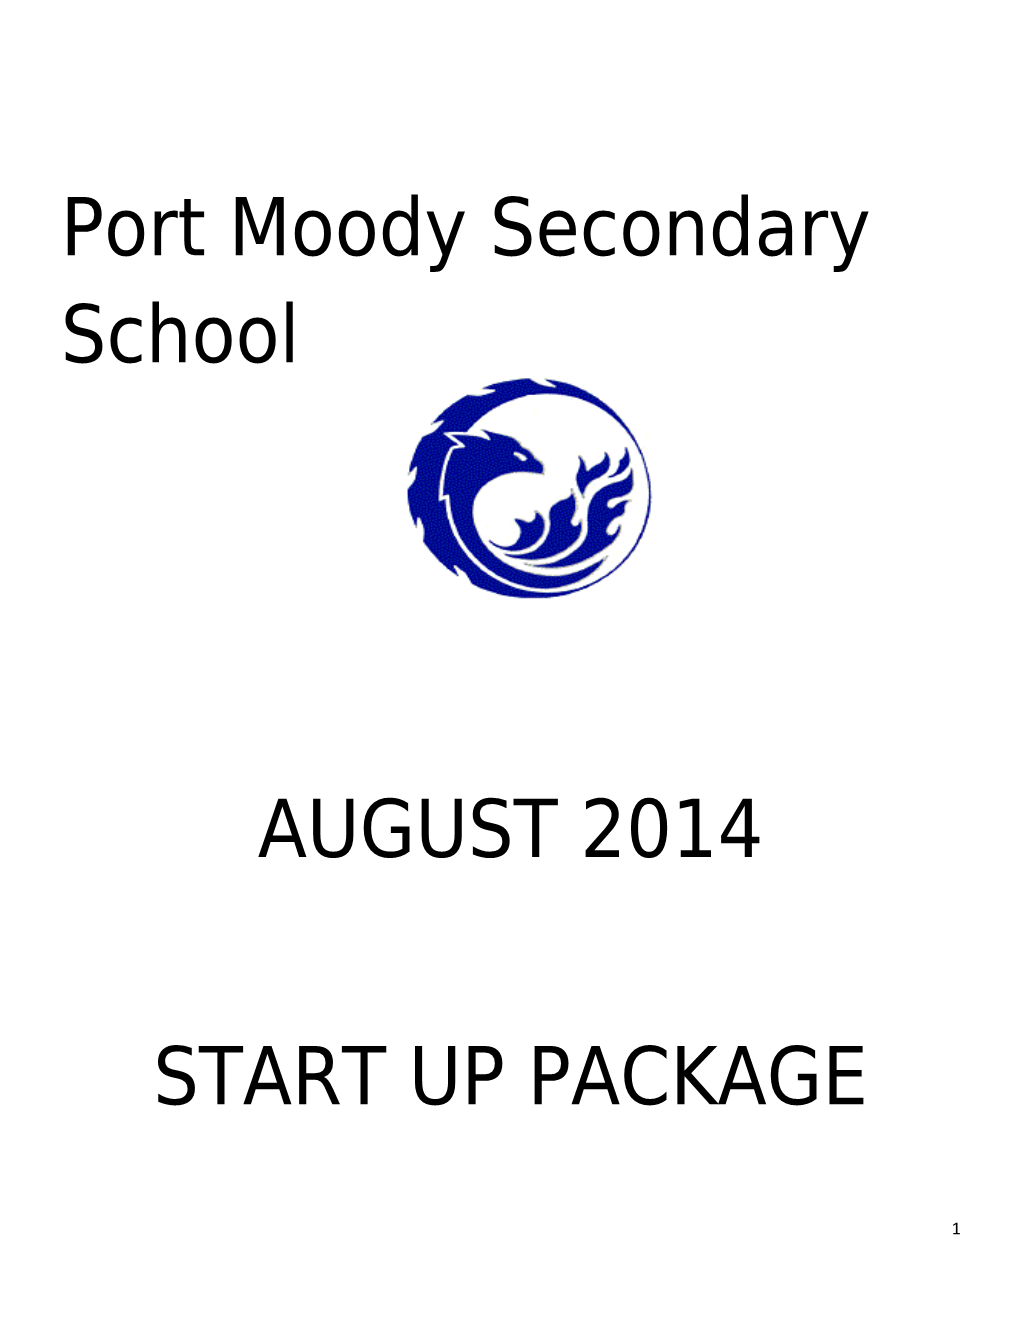 Port Moody Secondary School